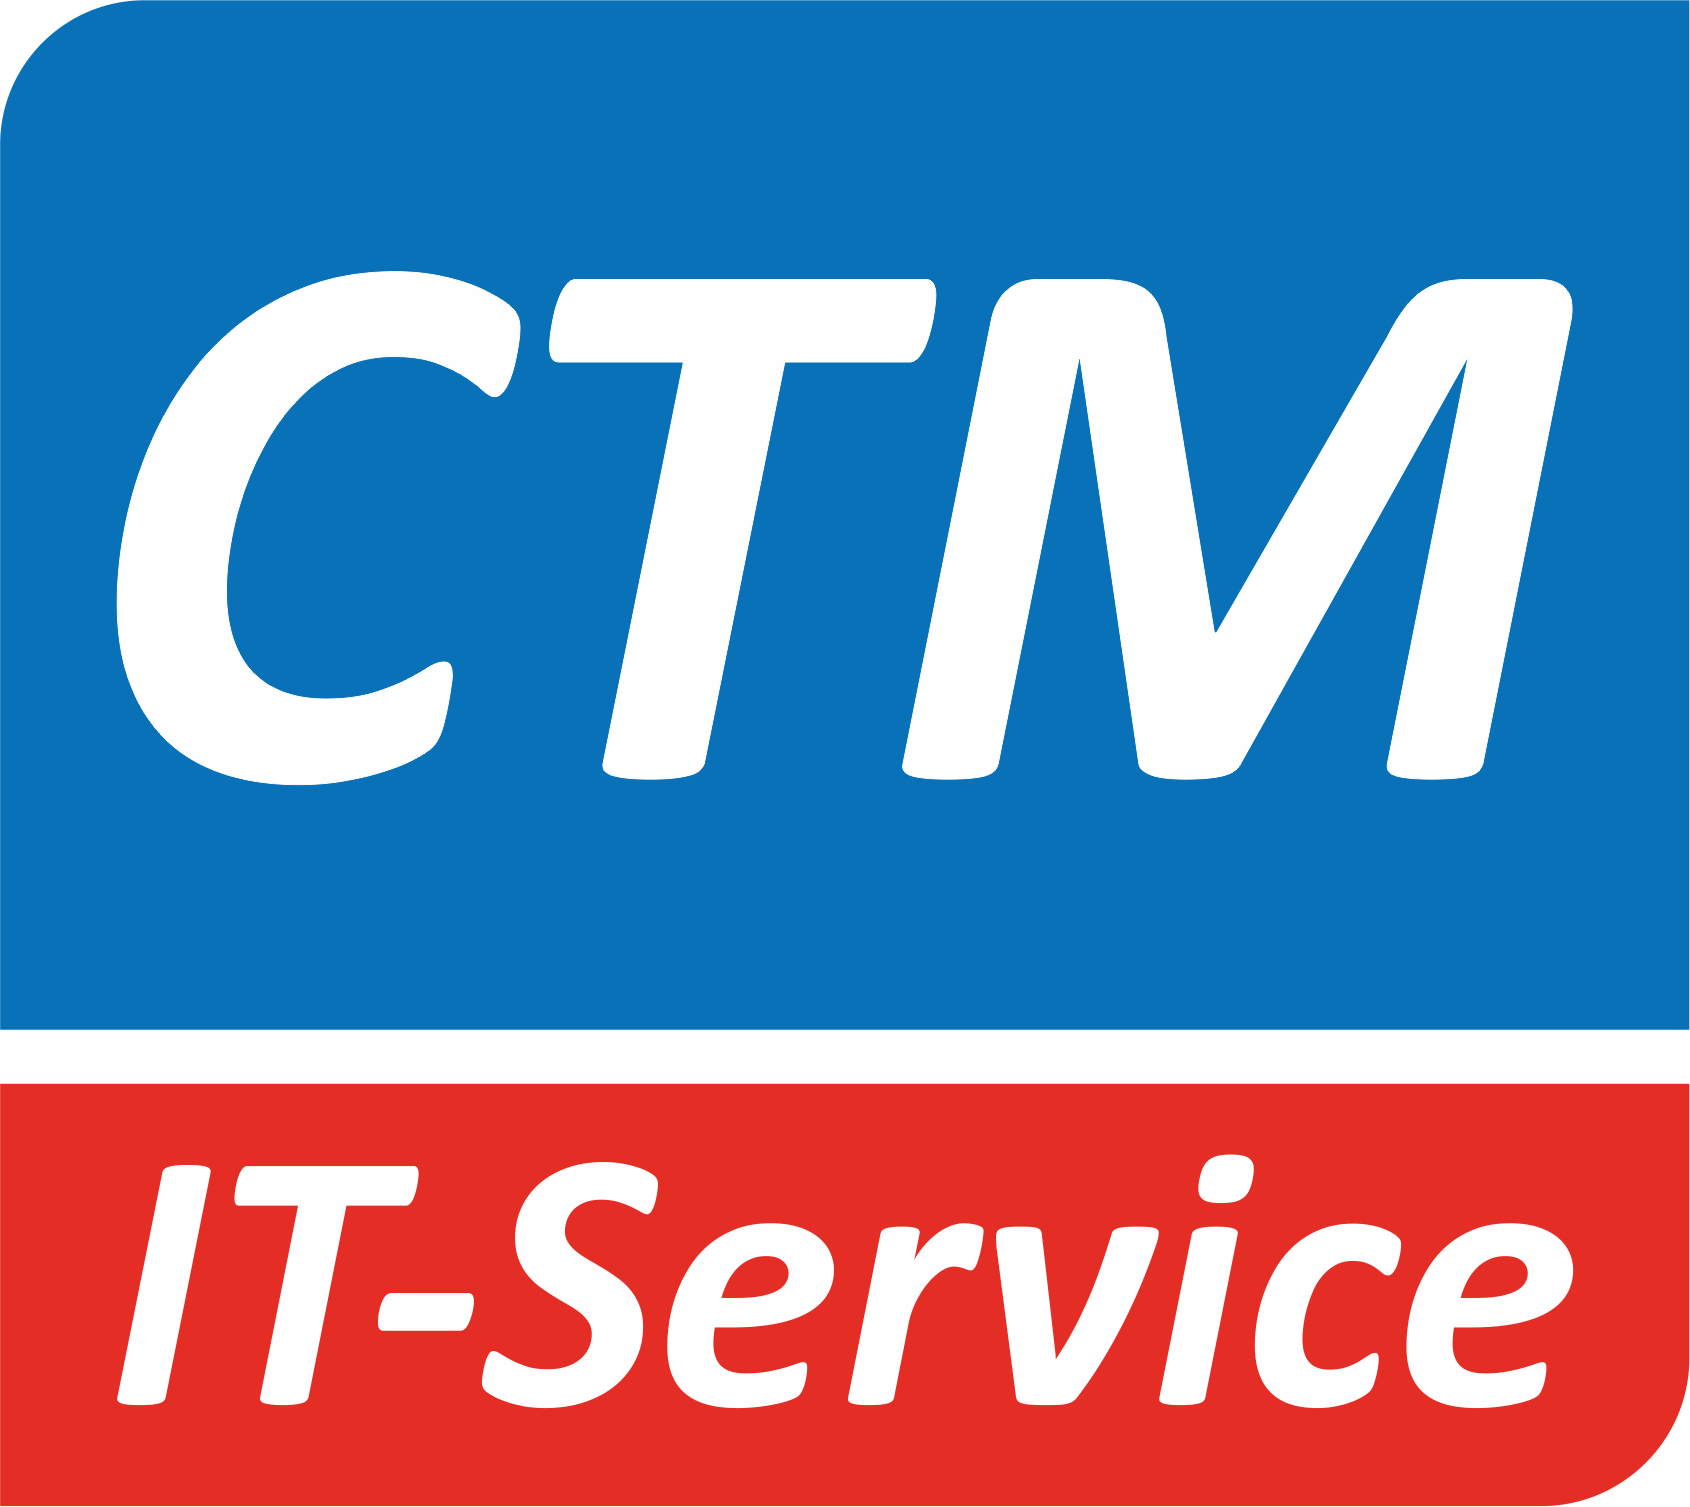 CTM IT-Service